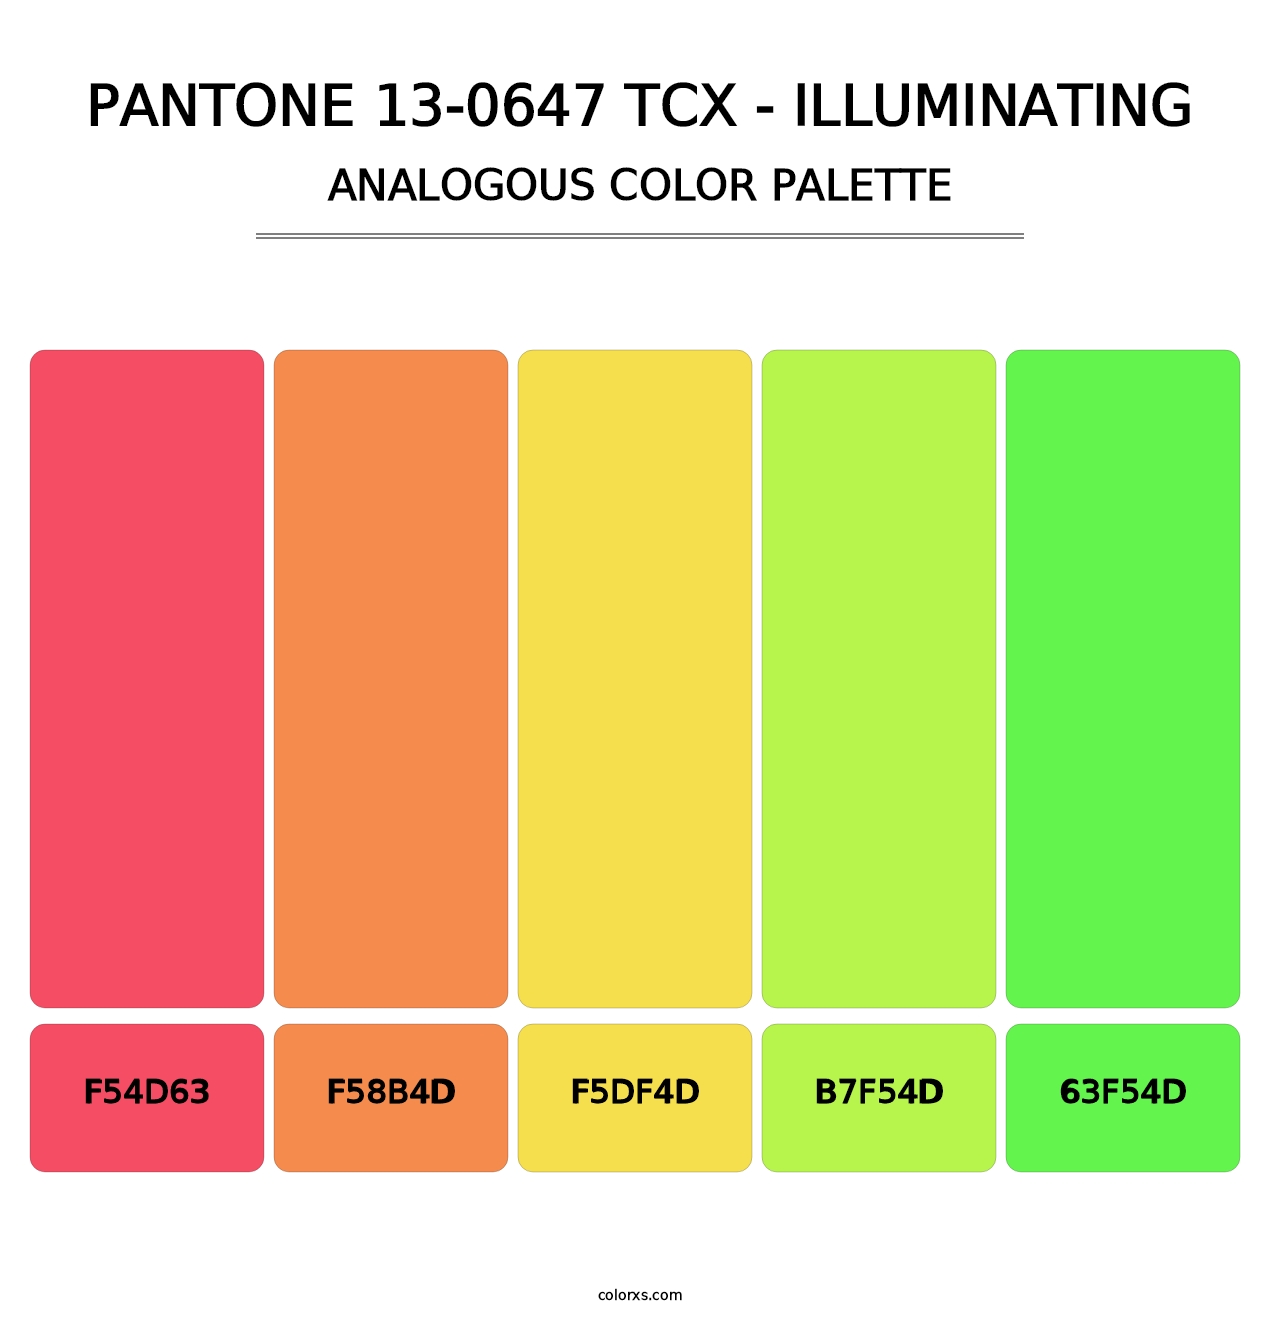 PANTONE 13-0647 TCX - Illuminating - Analogous Color Palette